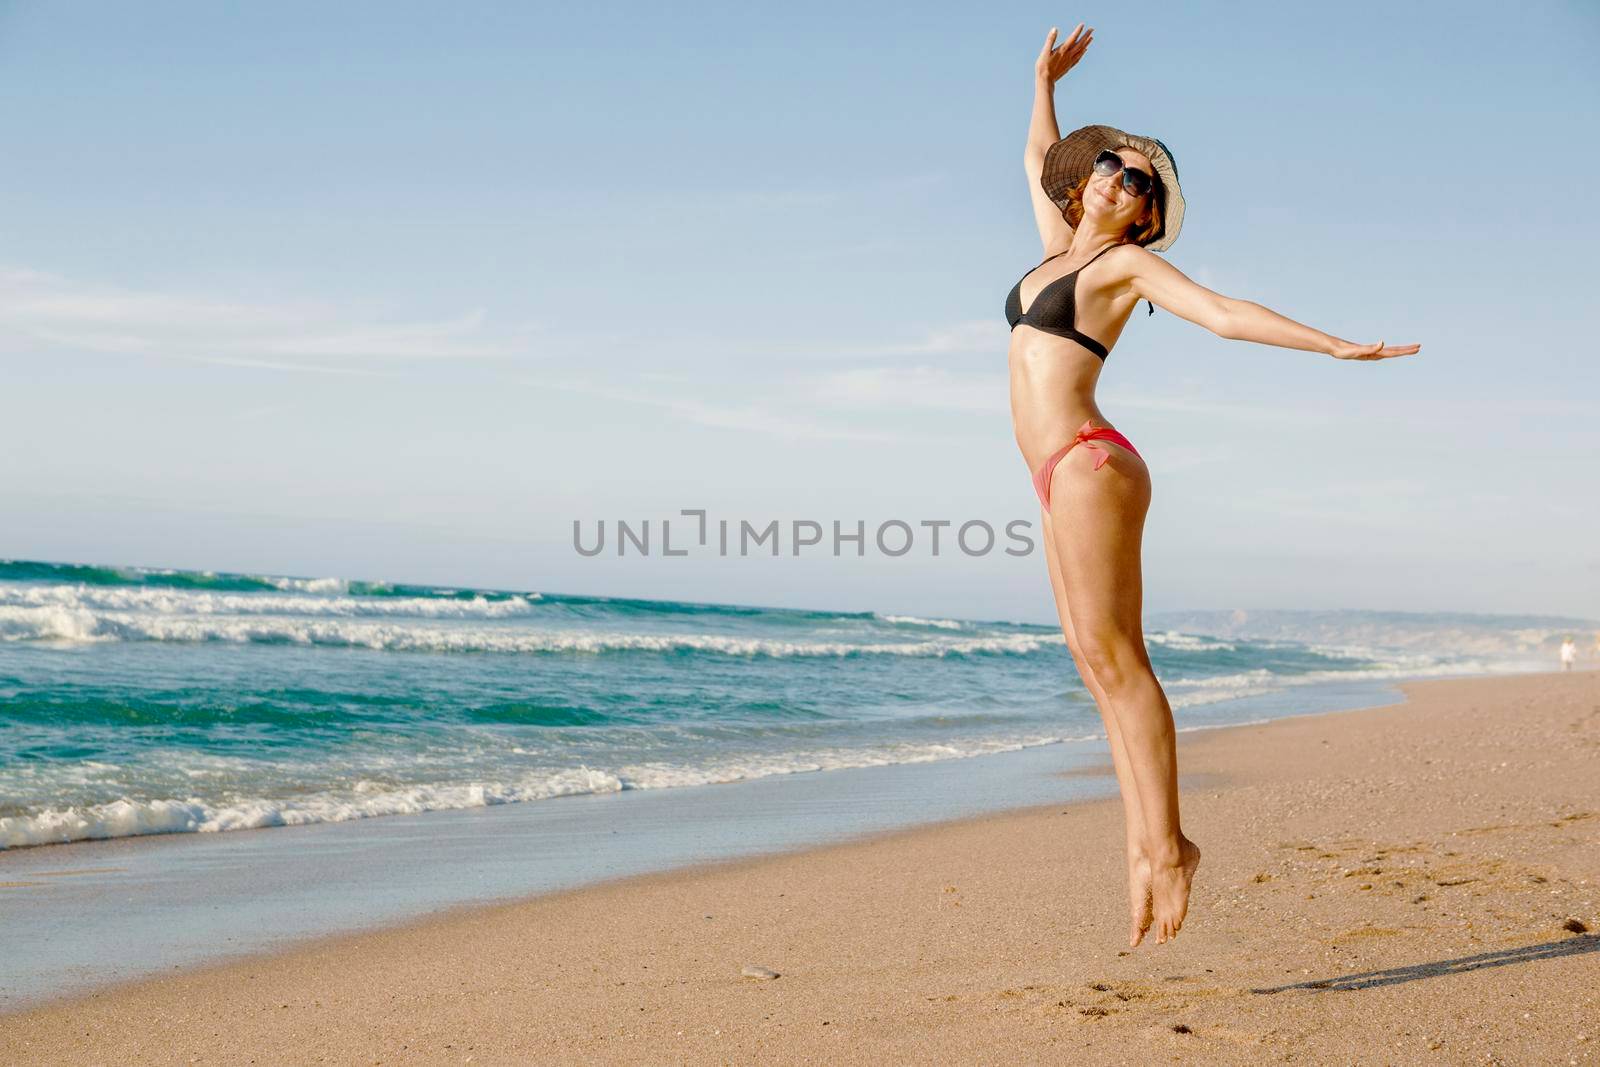 Beautiful woman jumping on the beach